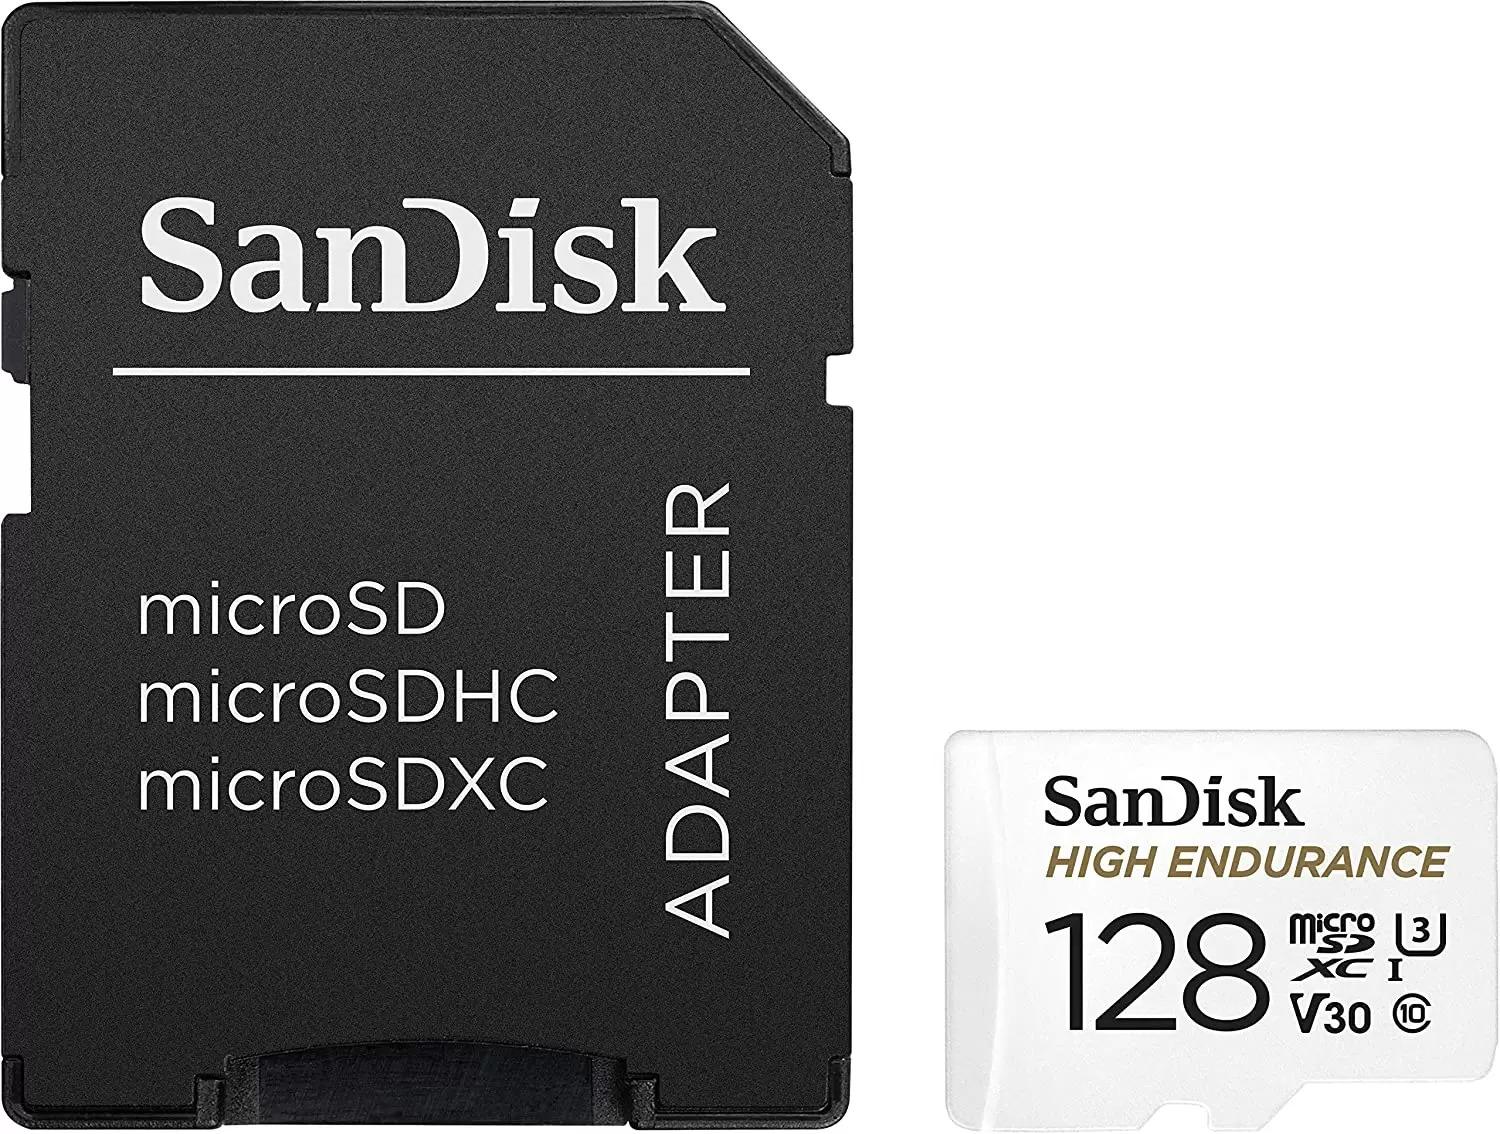 128GB SanDisk High Endurance U3 V30 Video microSDXC Card for $14.99